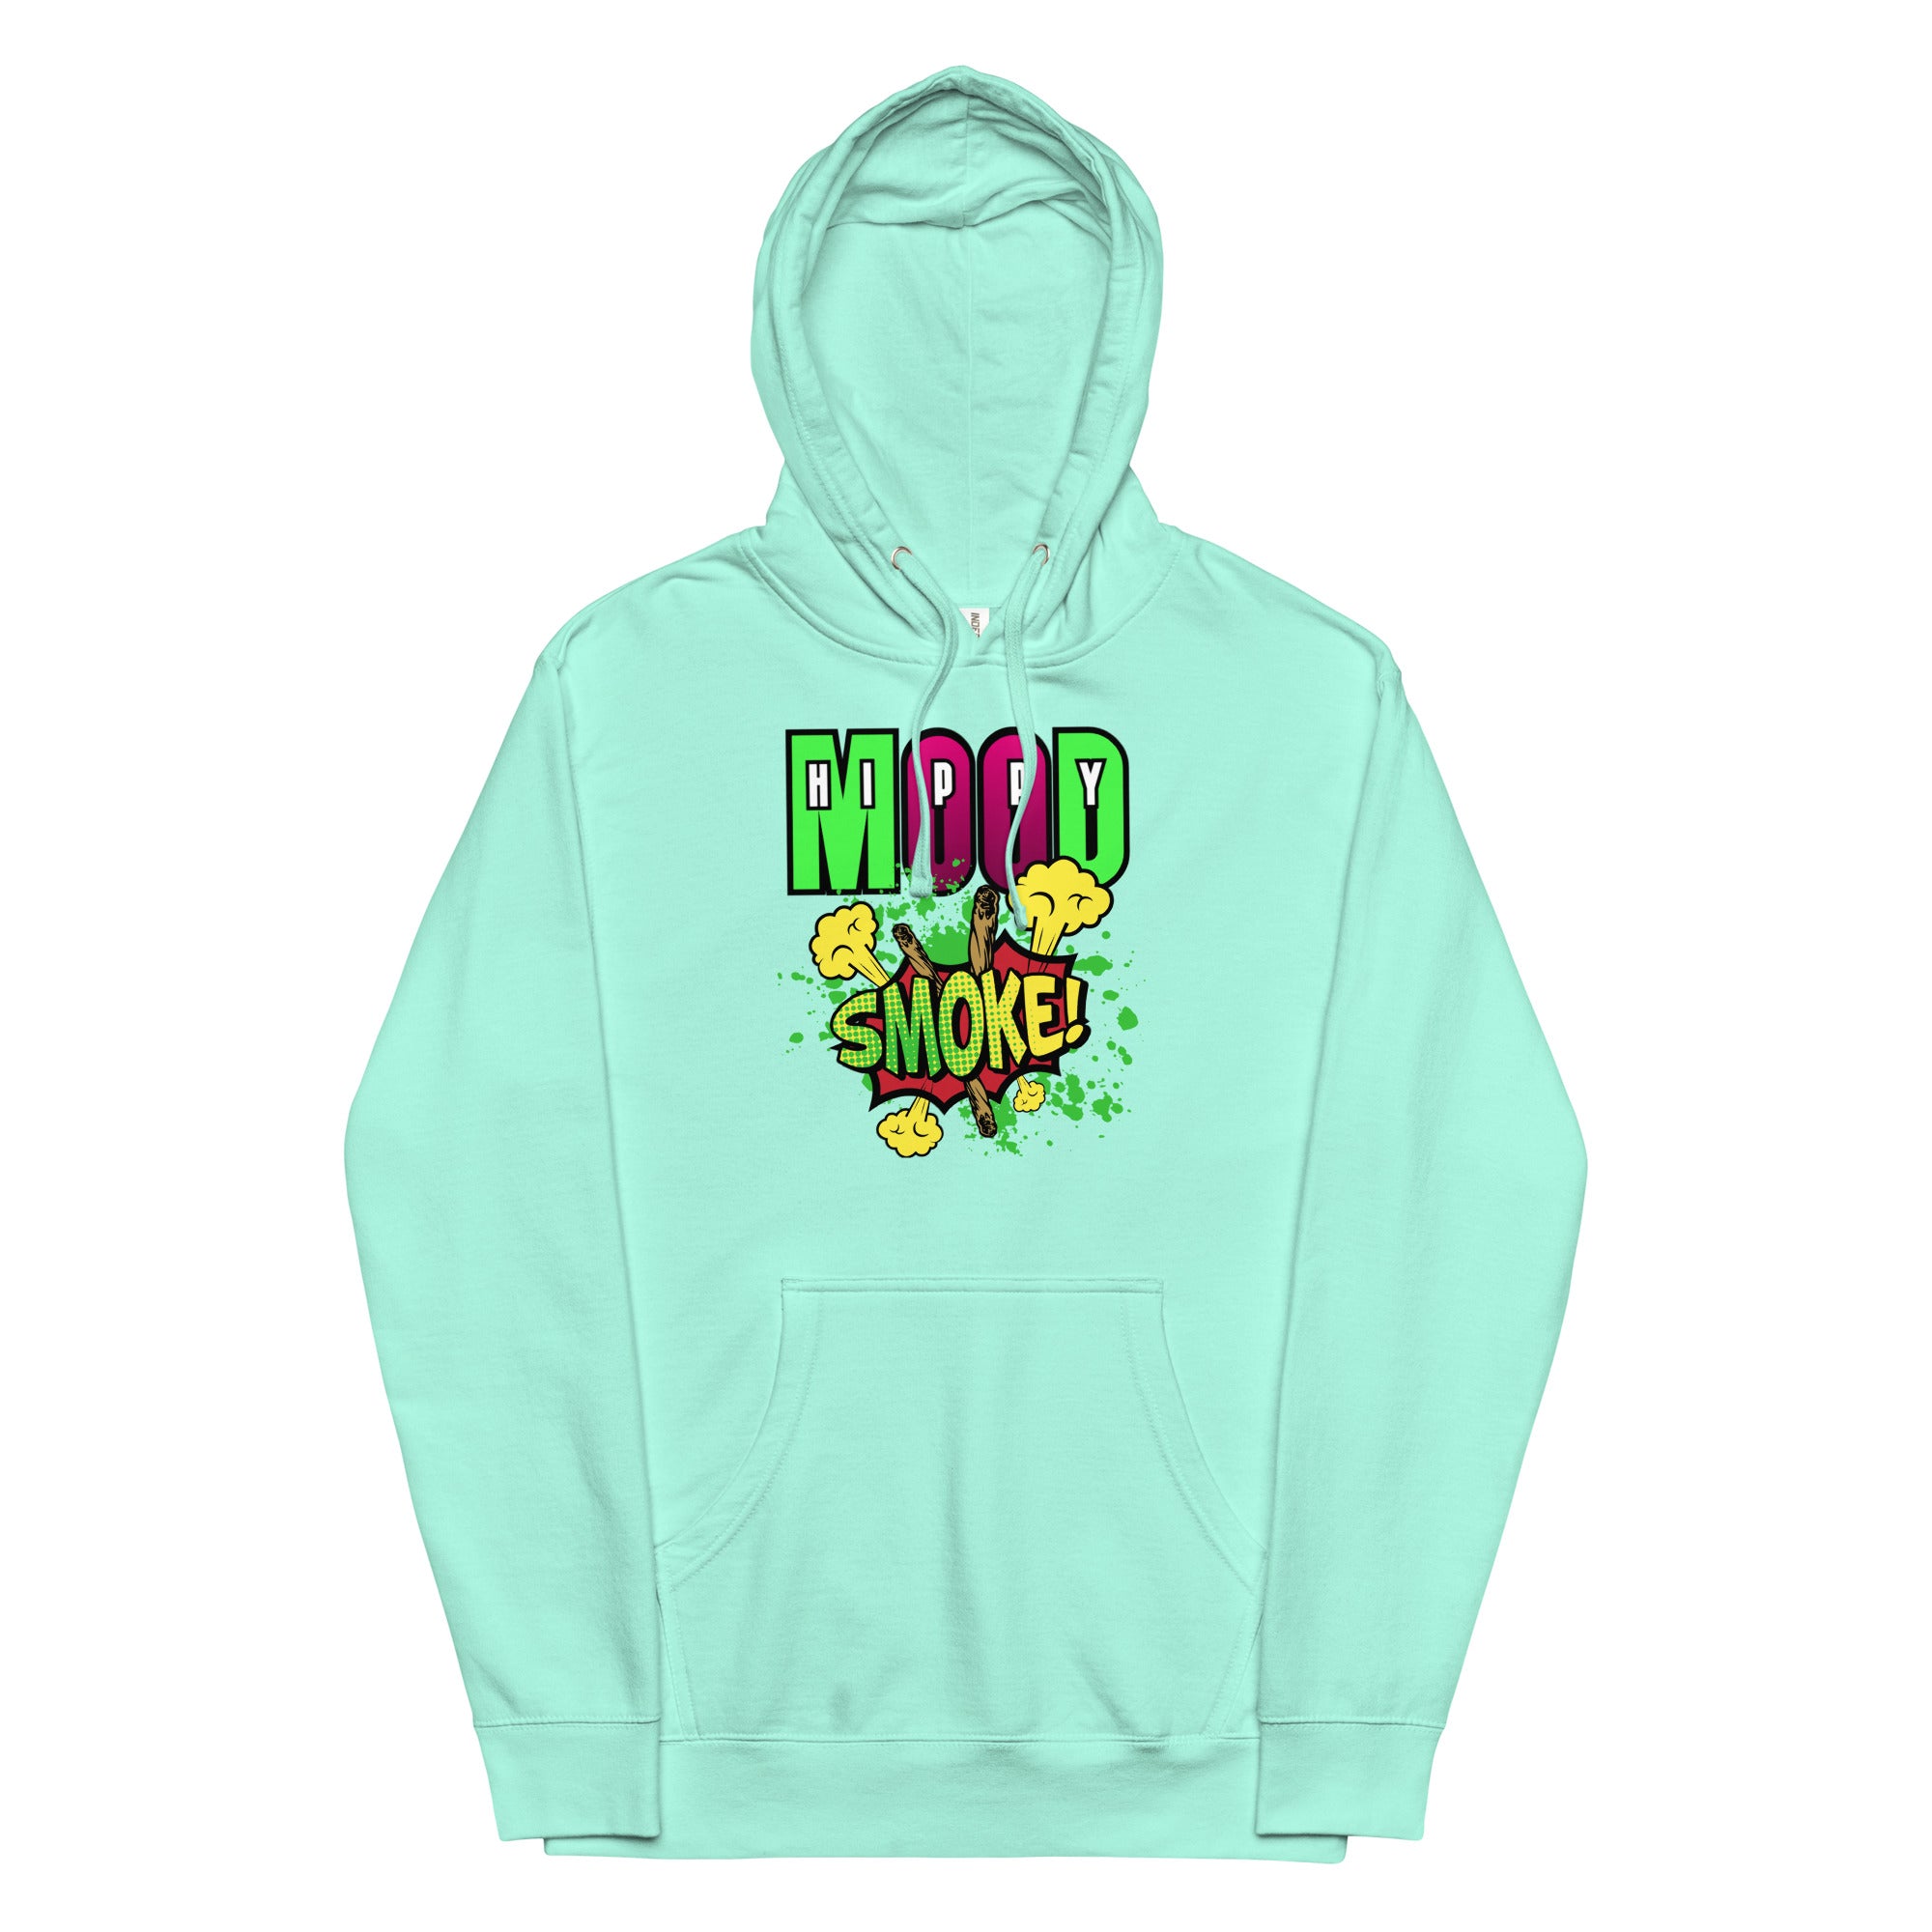 Hippy Mood Smoke! | Unisex midweight hoodie